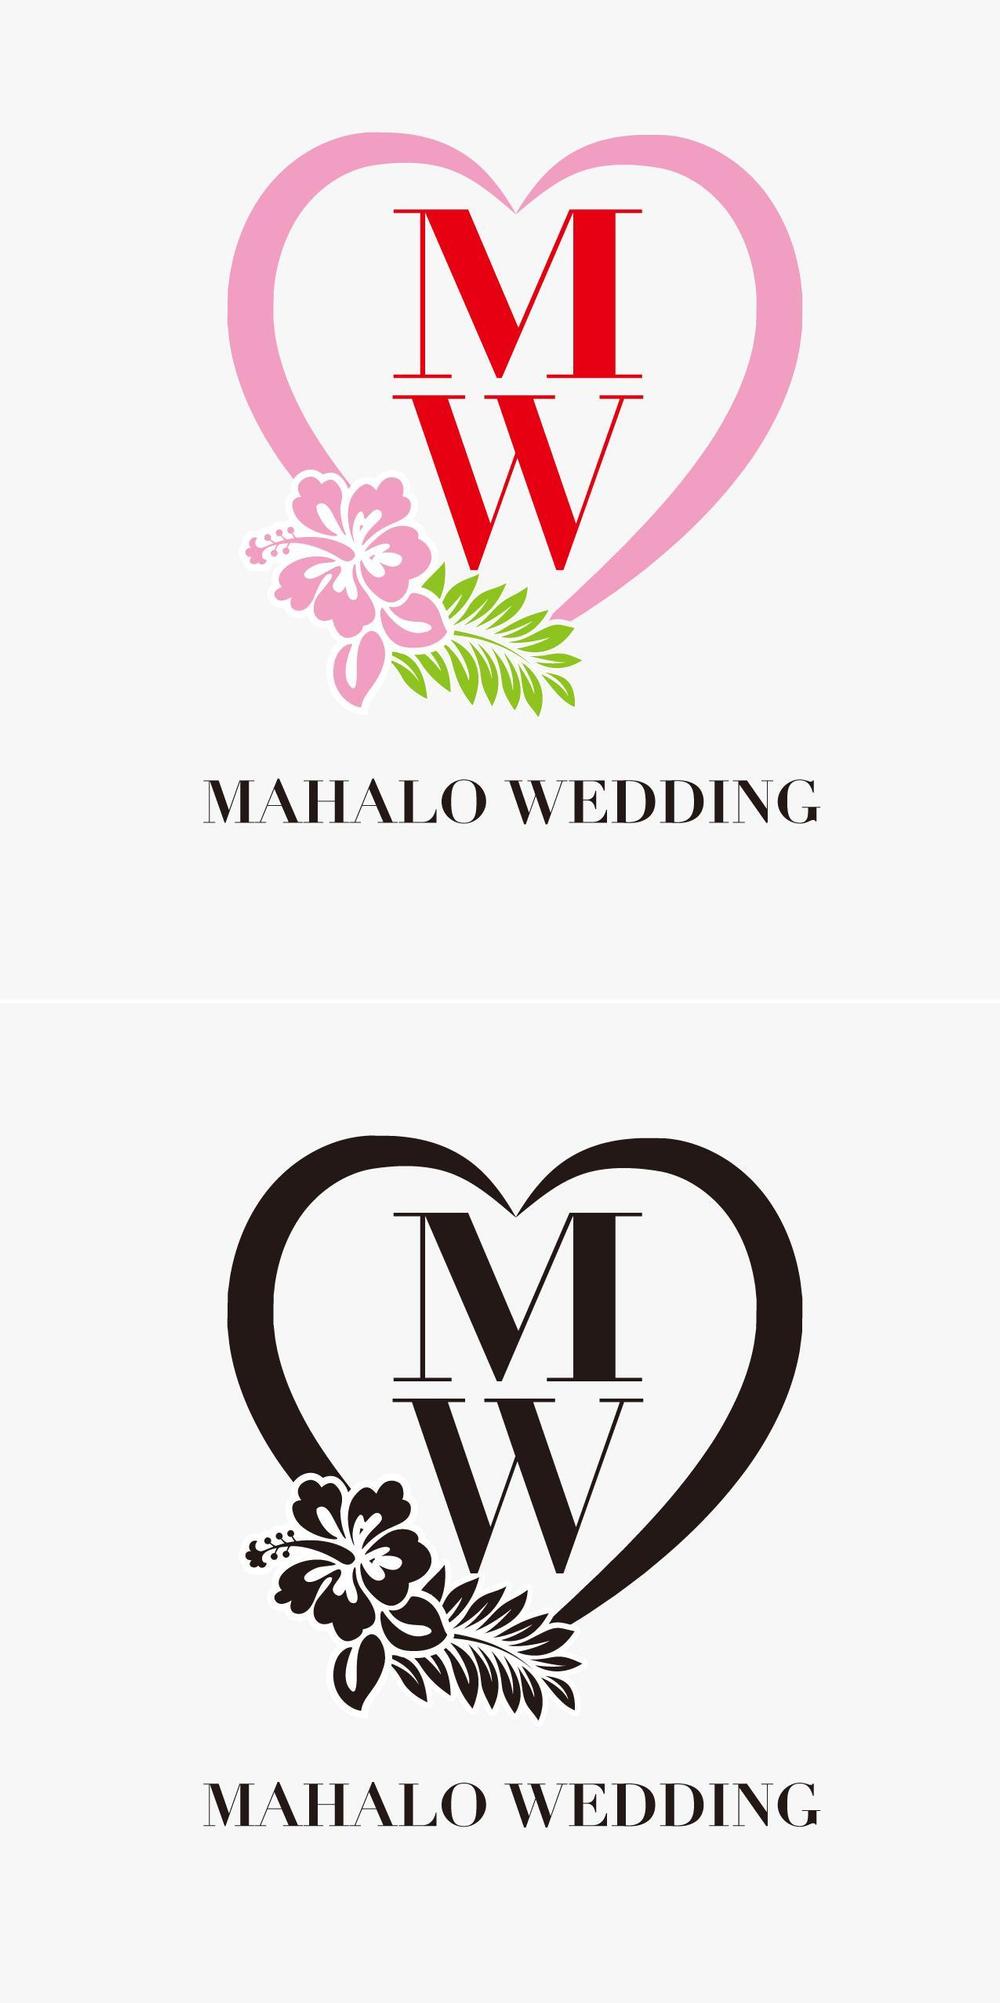 MAHALO WEDDING_2.jpg